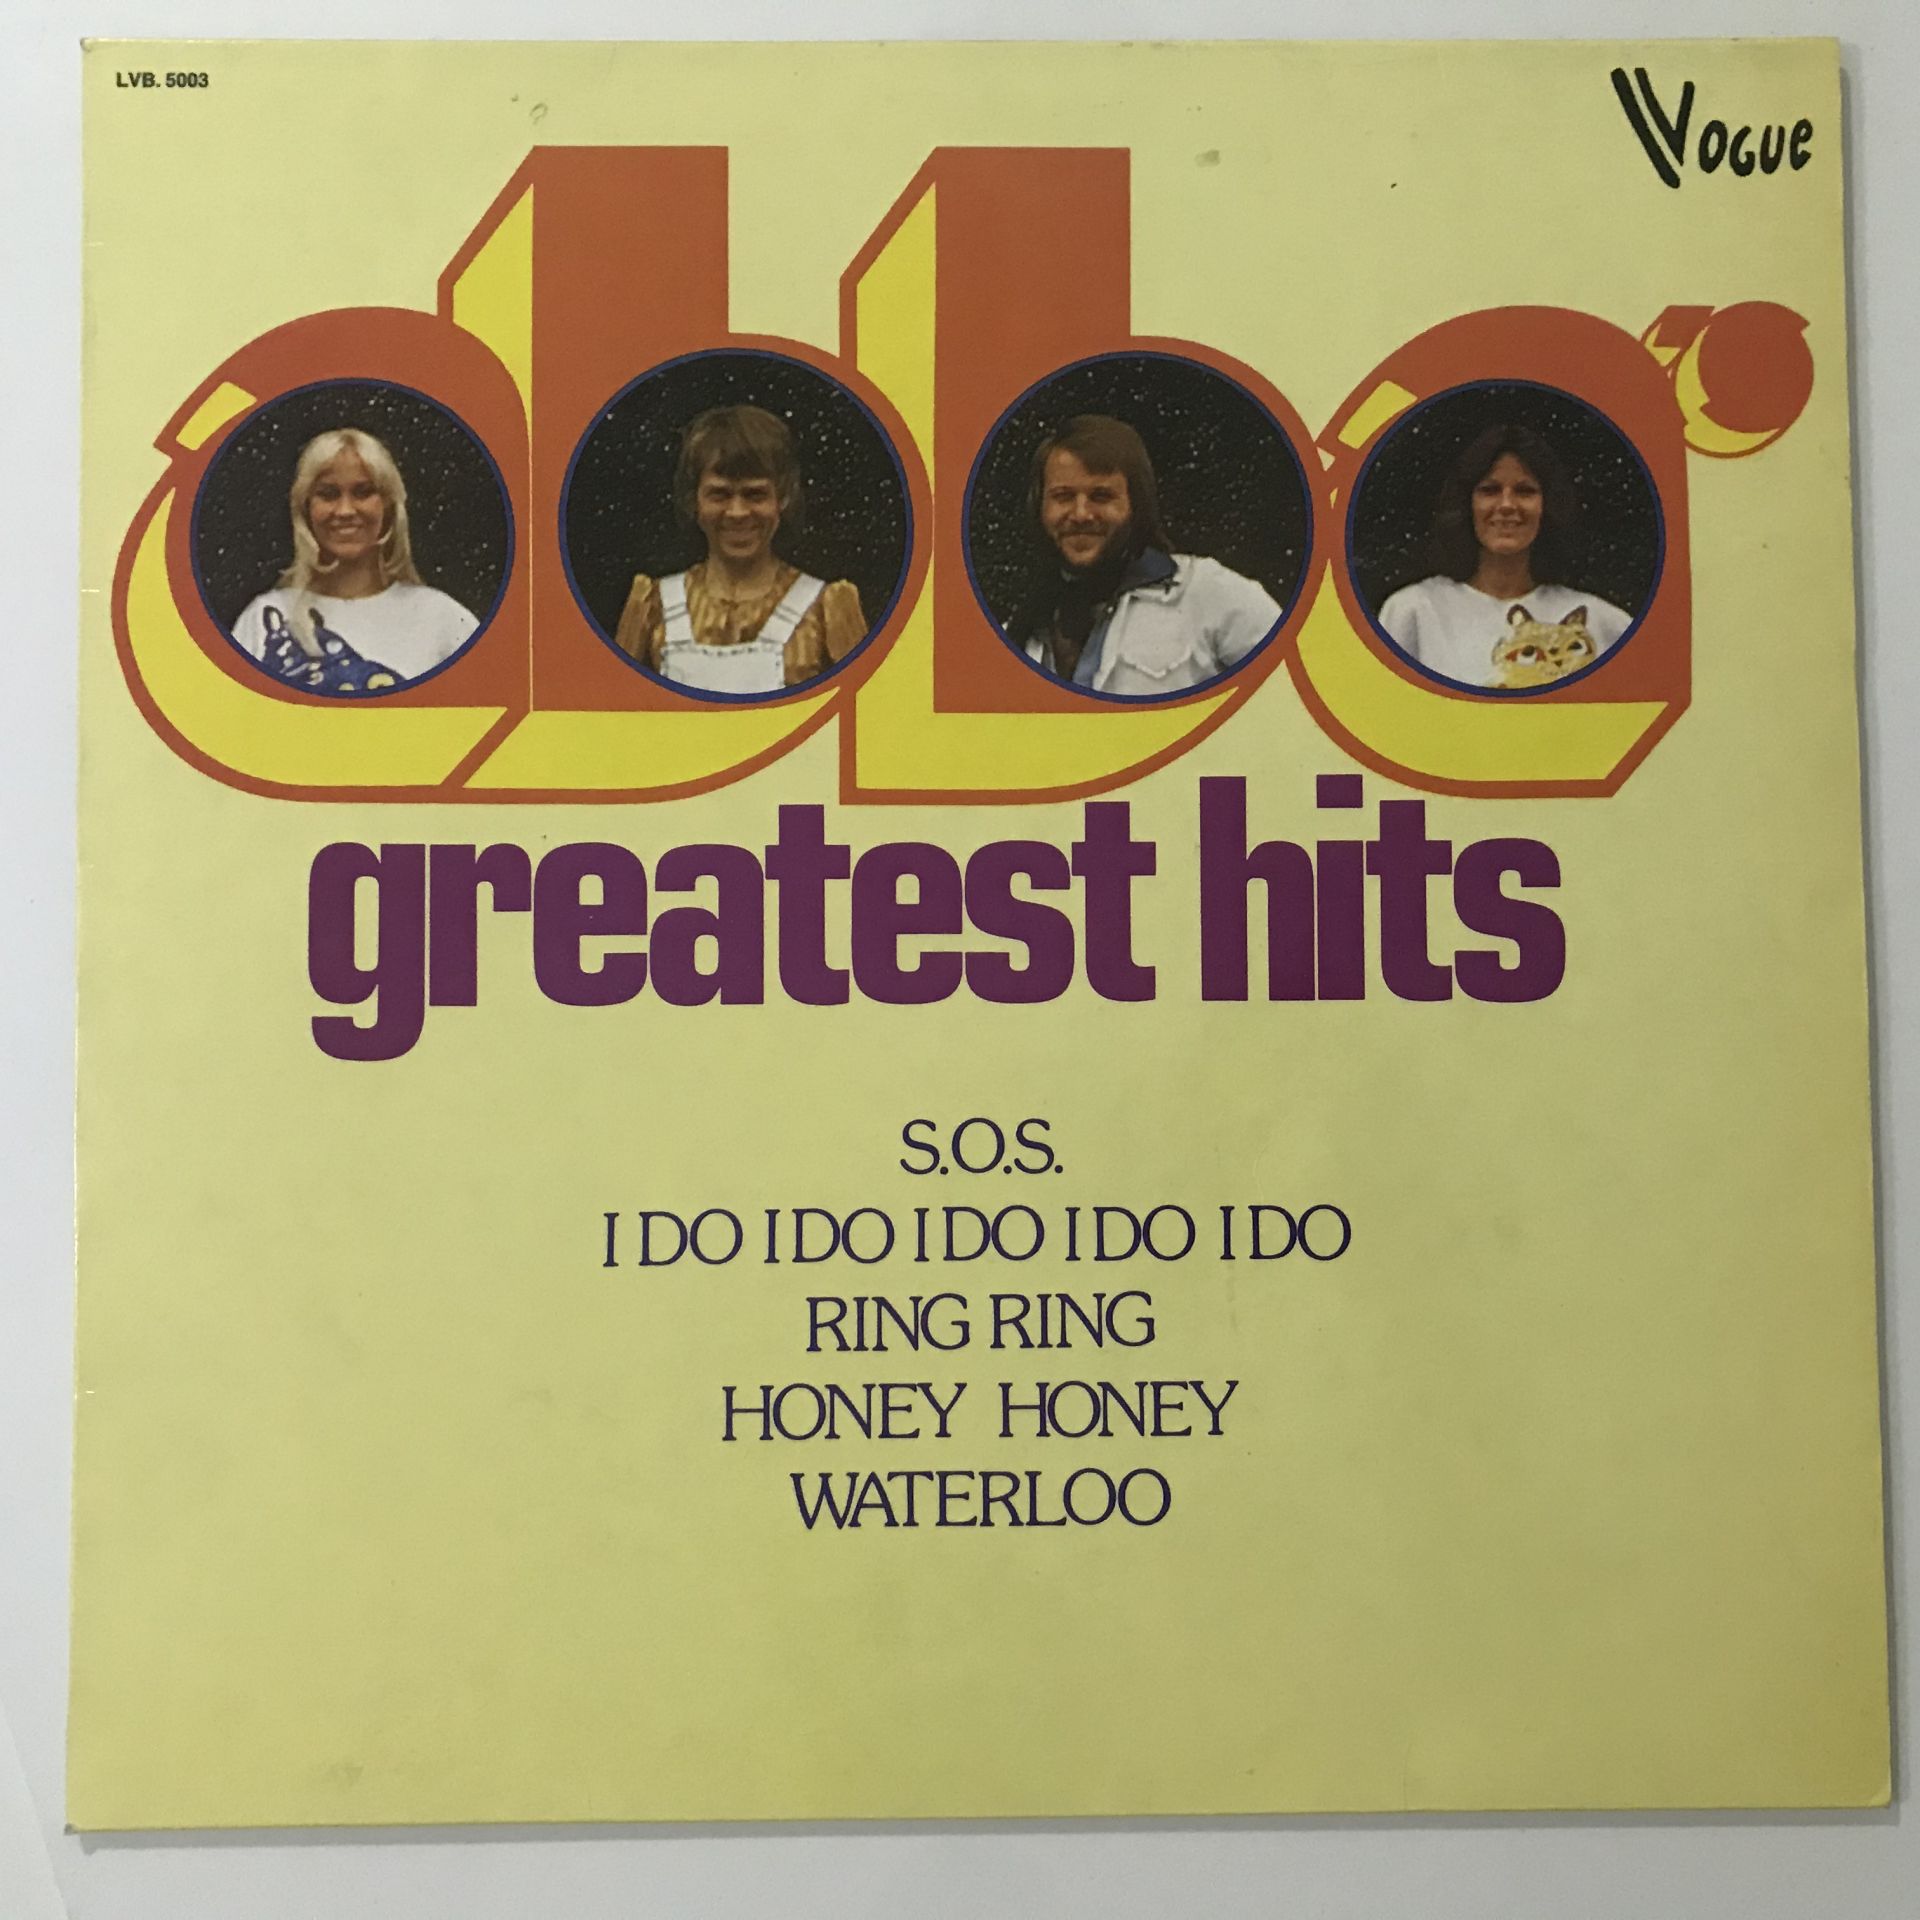 ABBA – Abba's Greatest Hits